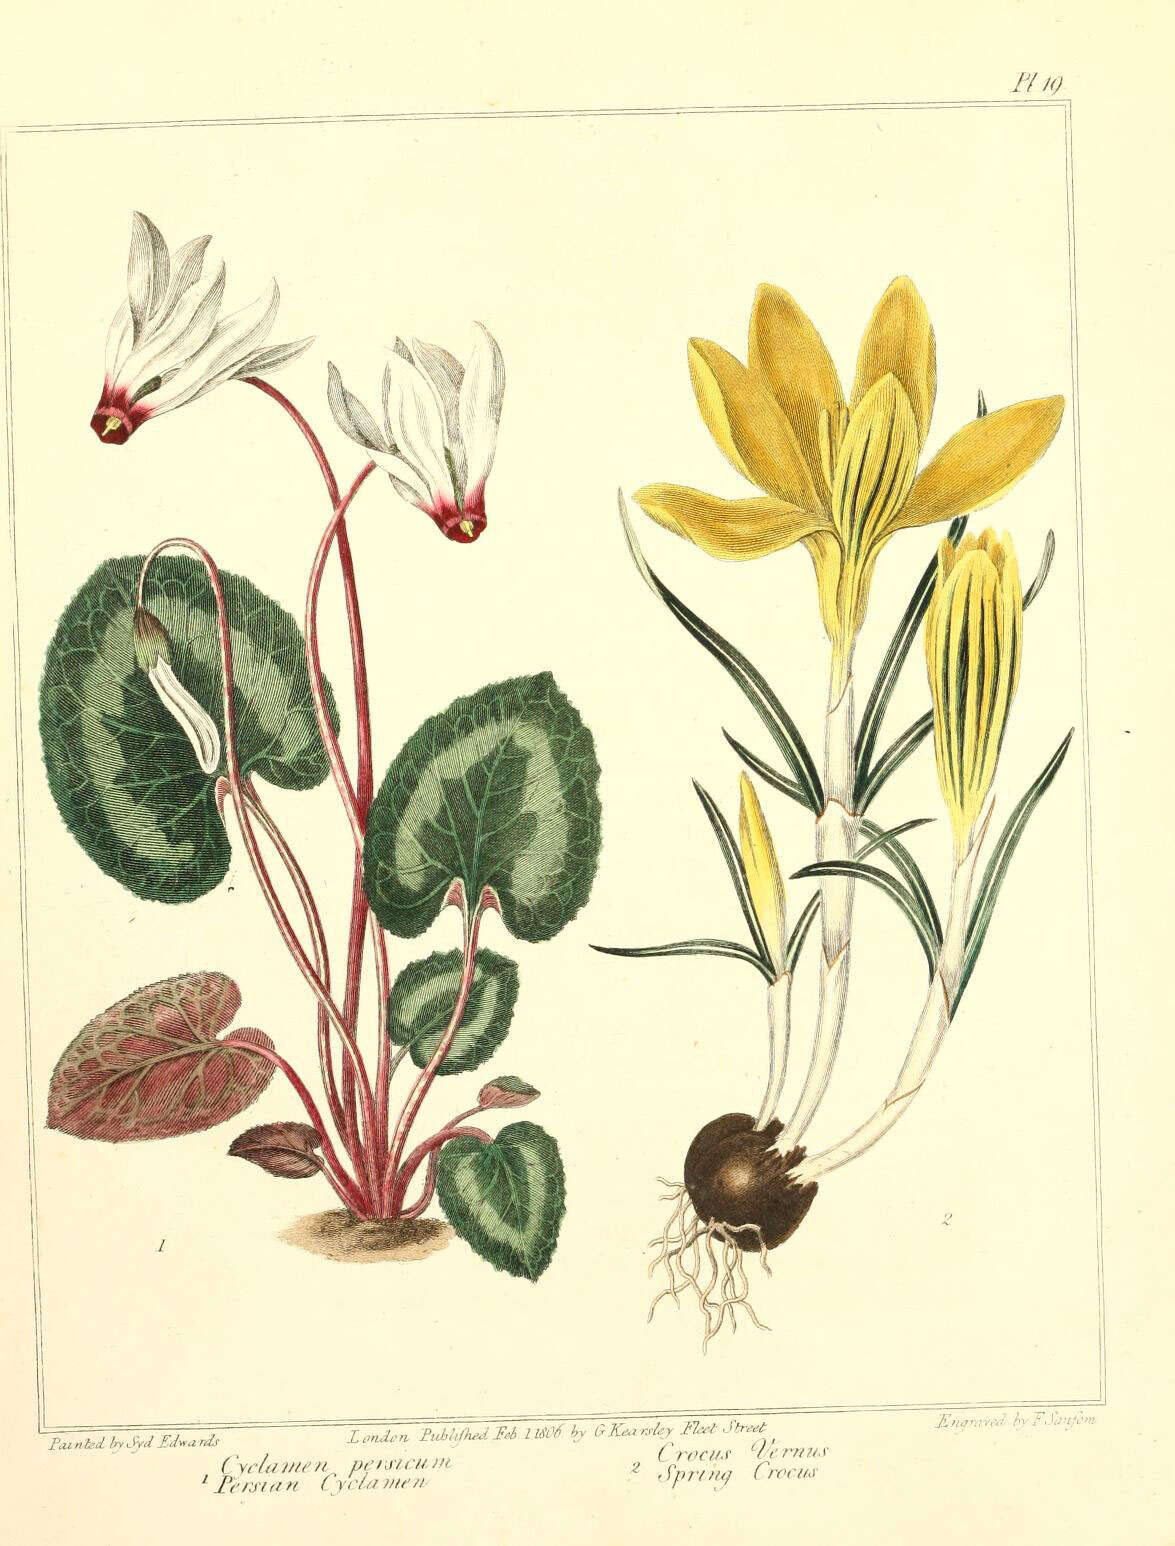 Image of florist's cyclamen